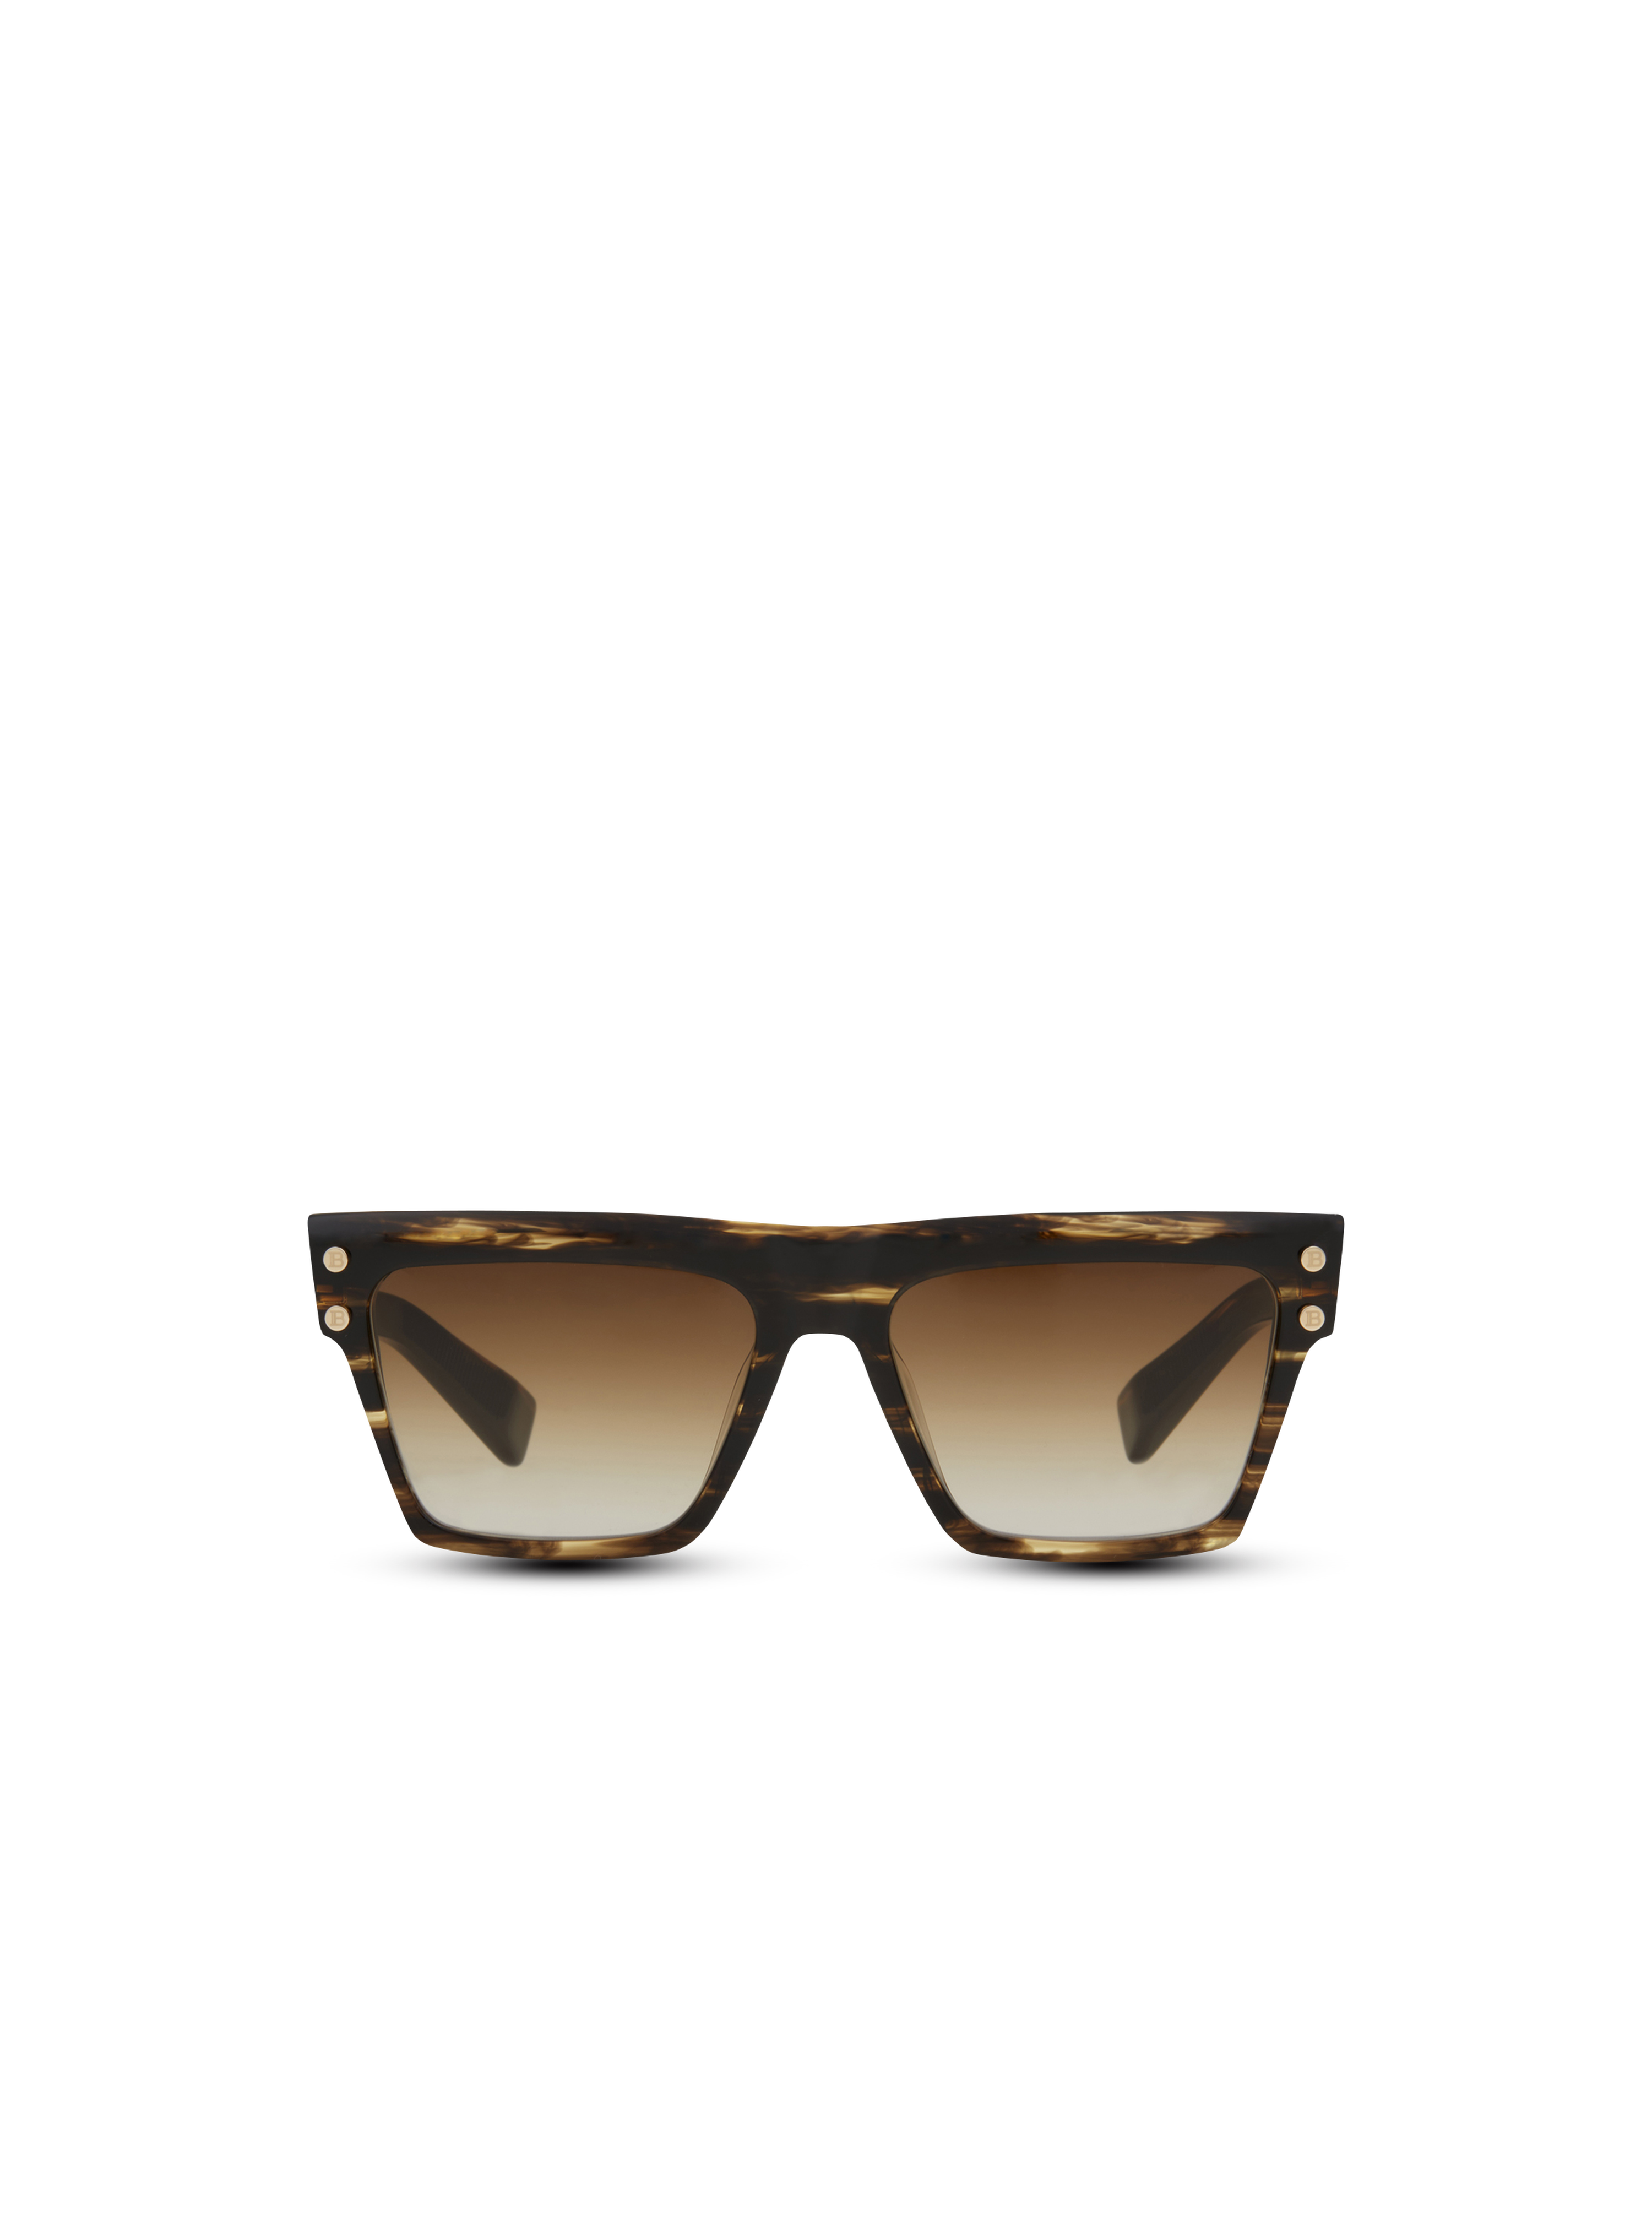 B-V sunglasses, brown